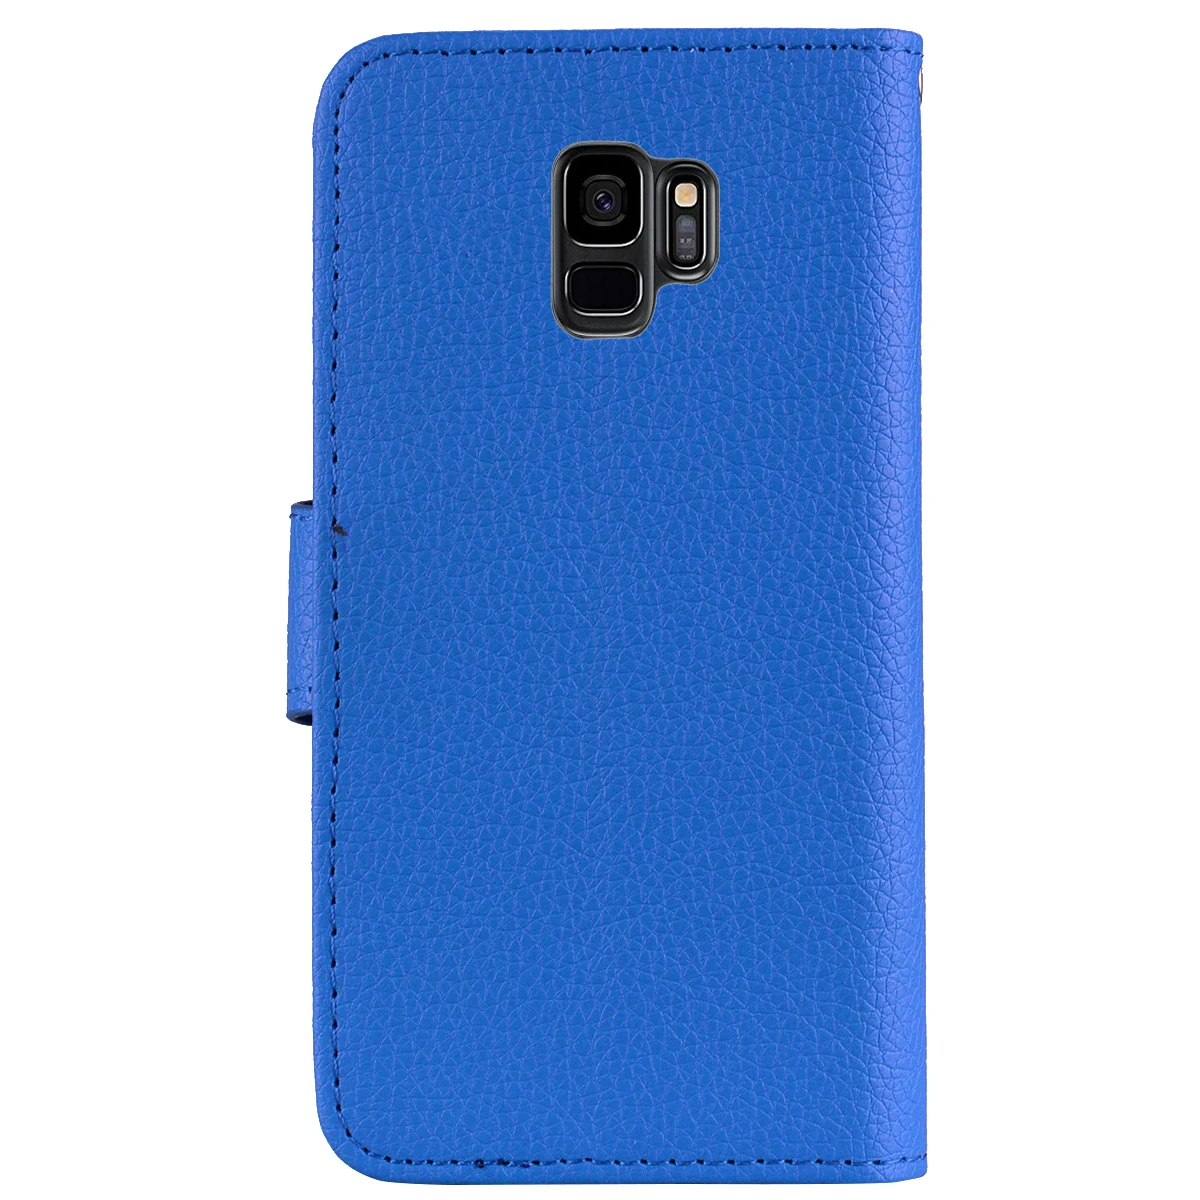 S8 S9 S10 S5 S6 S7 чехол для телефона из искусственной кожи чехол-портмоне для samsung Galaxy A6 A7 A8 J4 J6 A3 A5 J3 J5 J7 Флип Стенд кожаный чехол